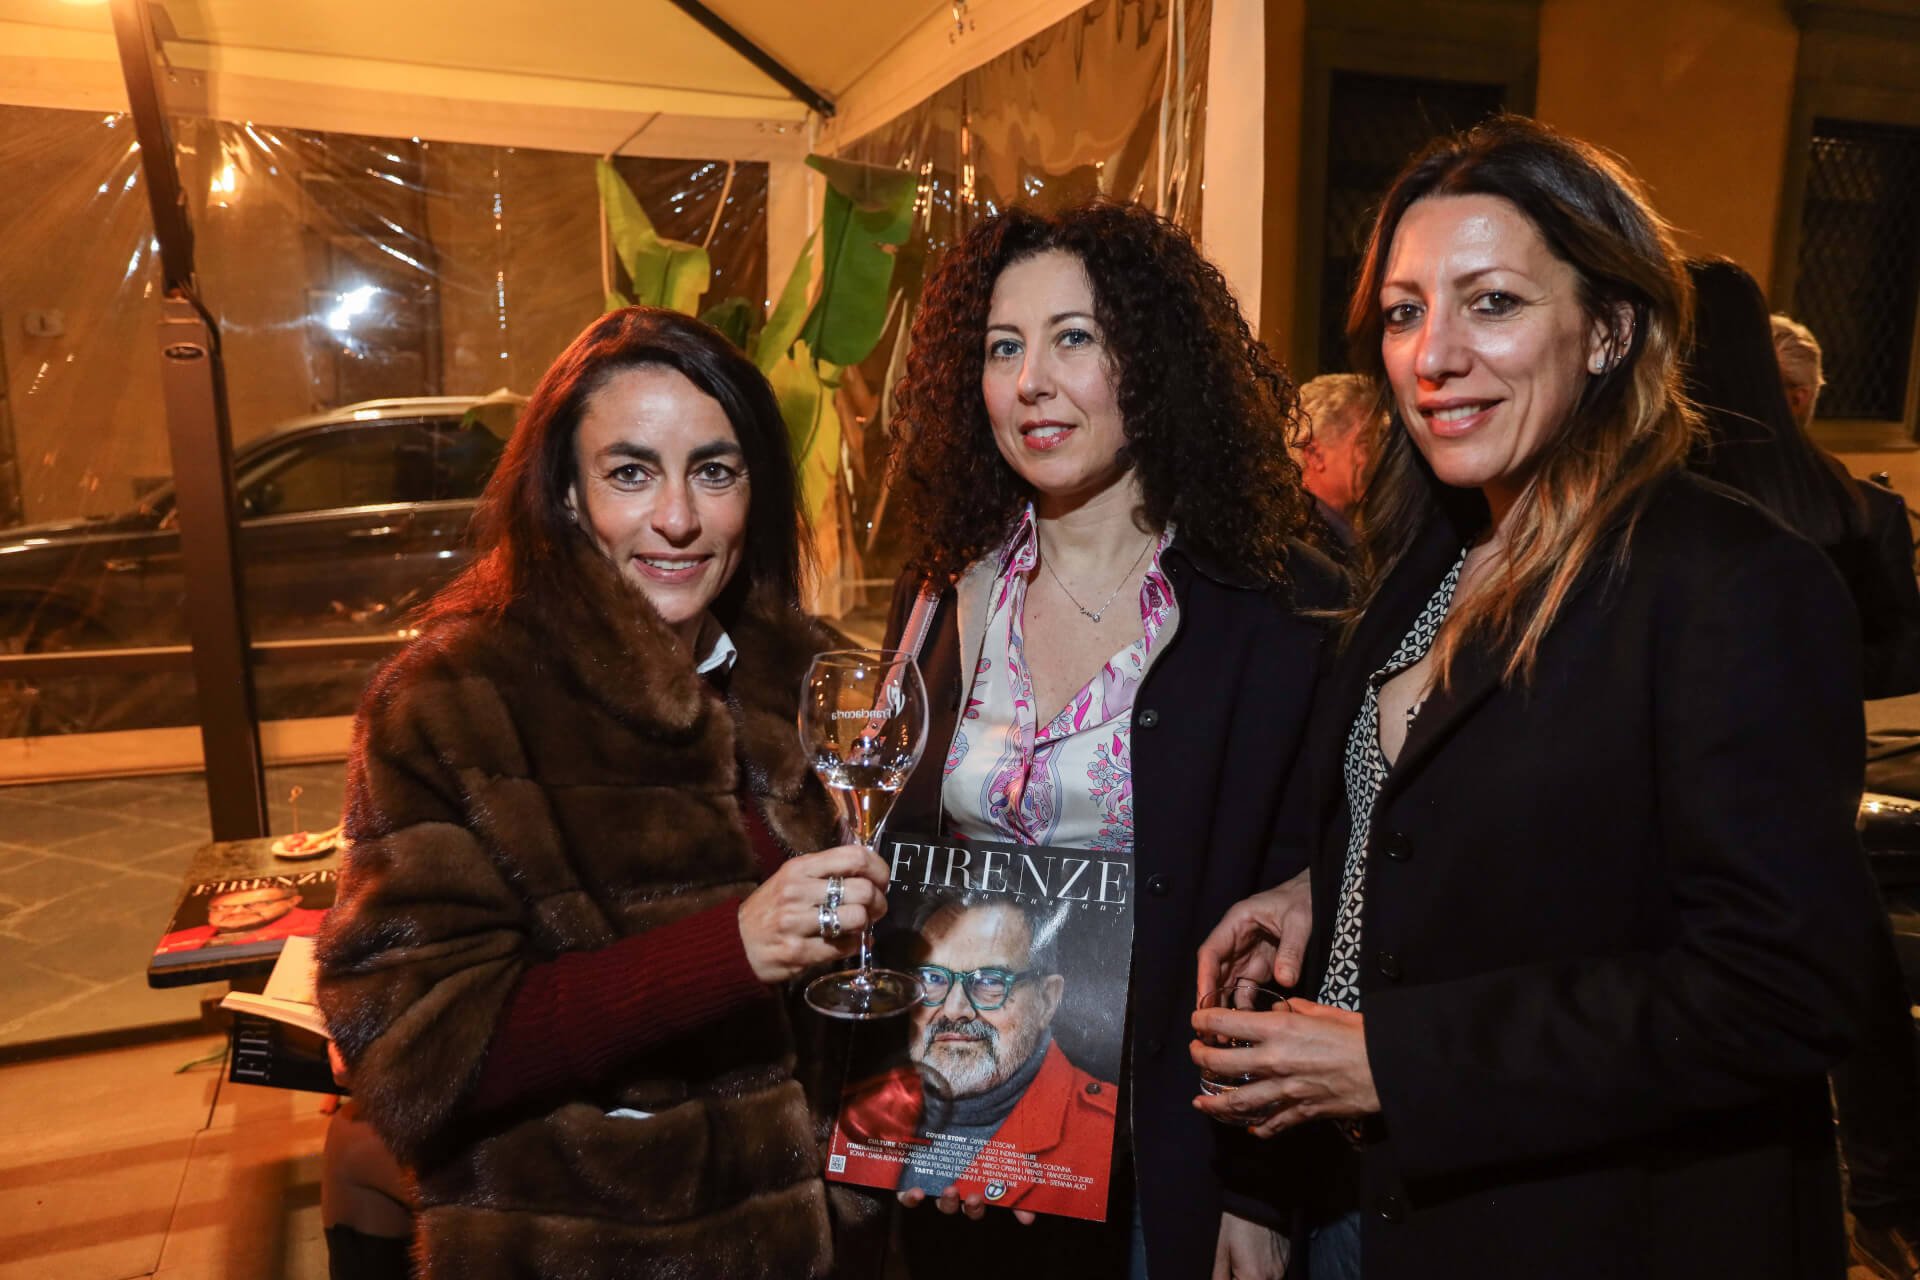 Angela Deboli, Francesca Bianchi, Ilaria Mannini

